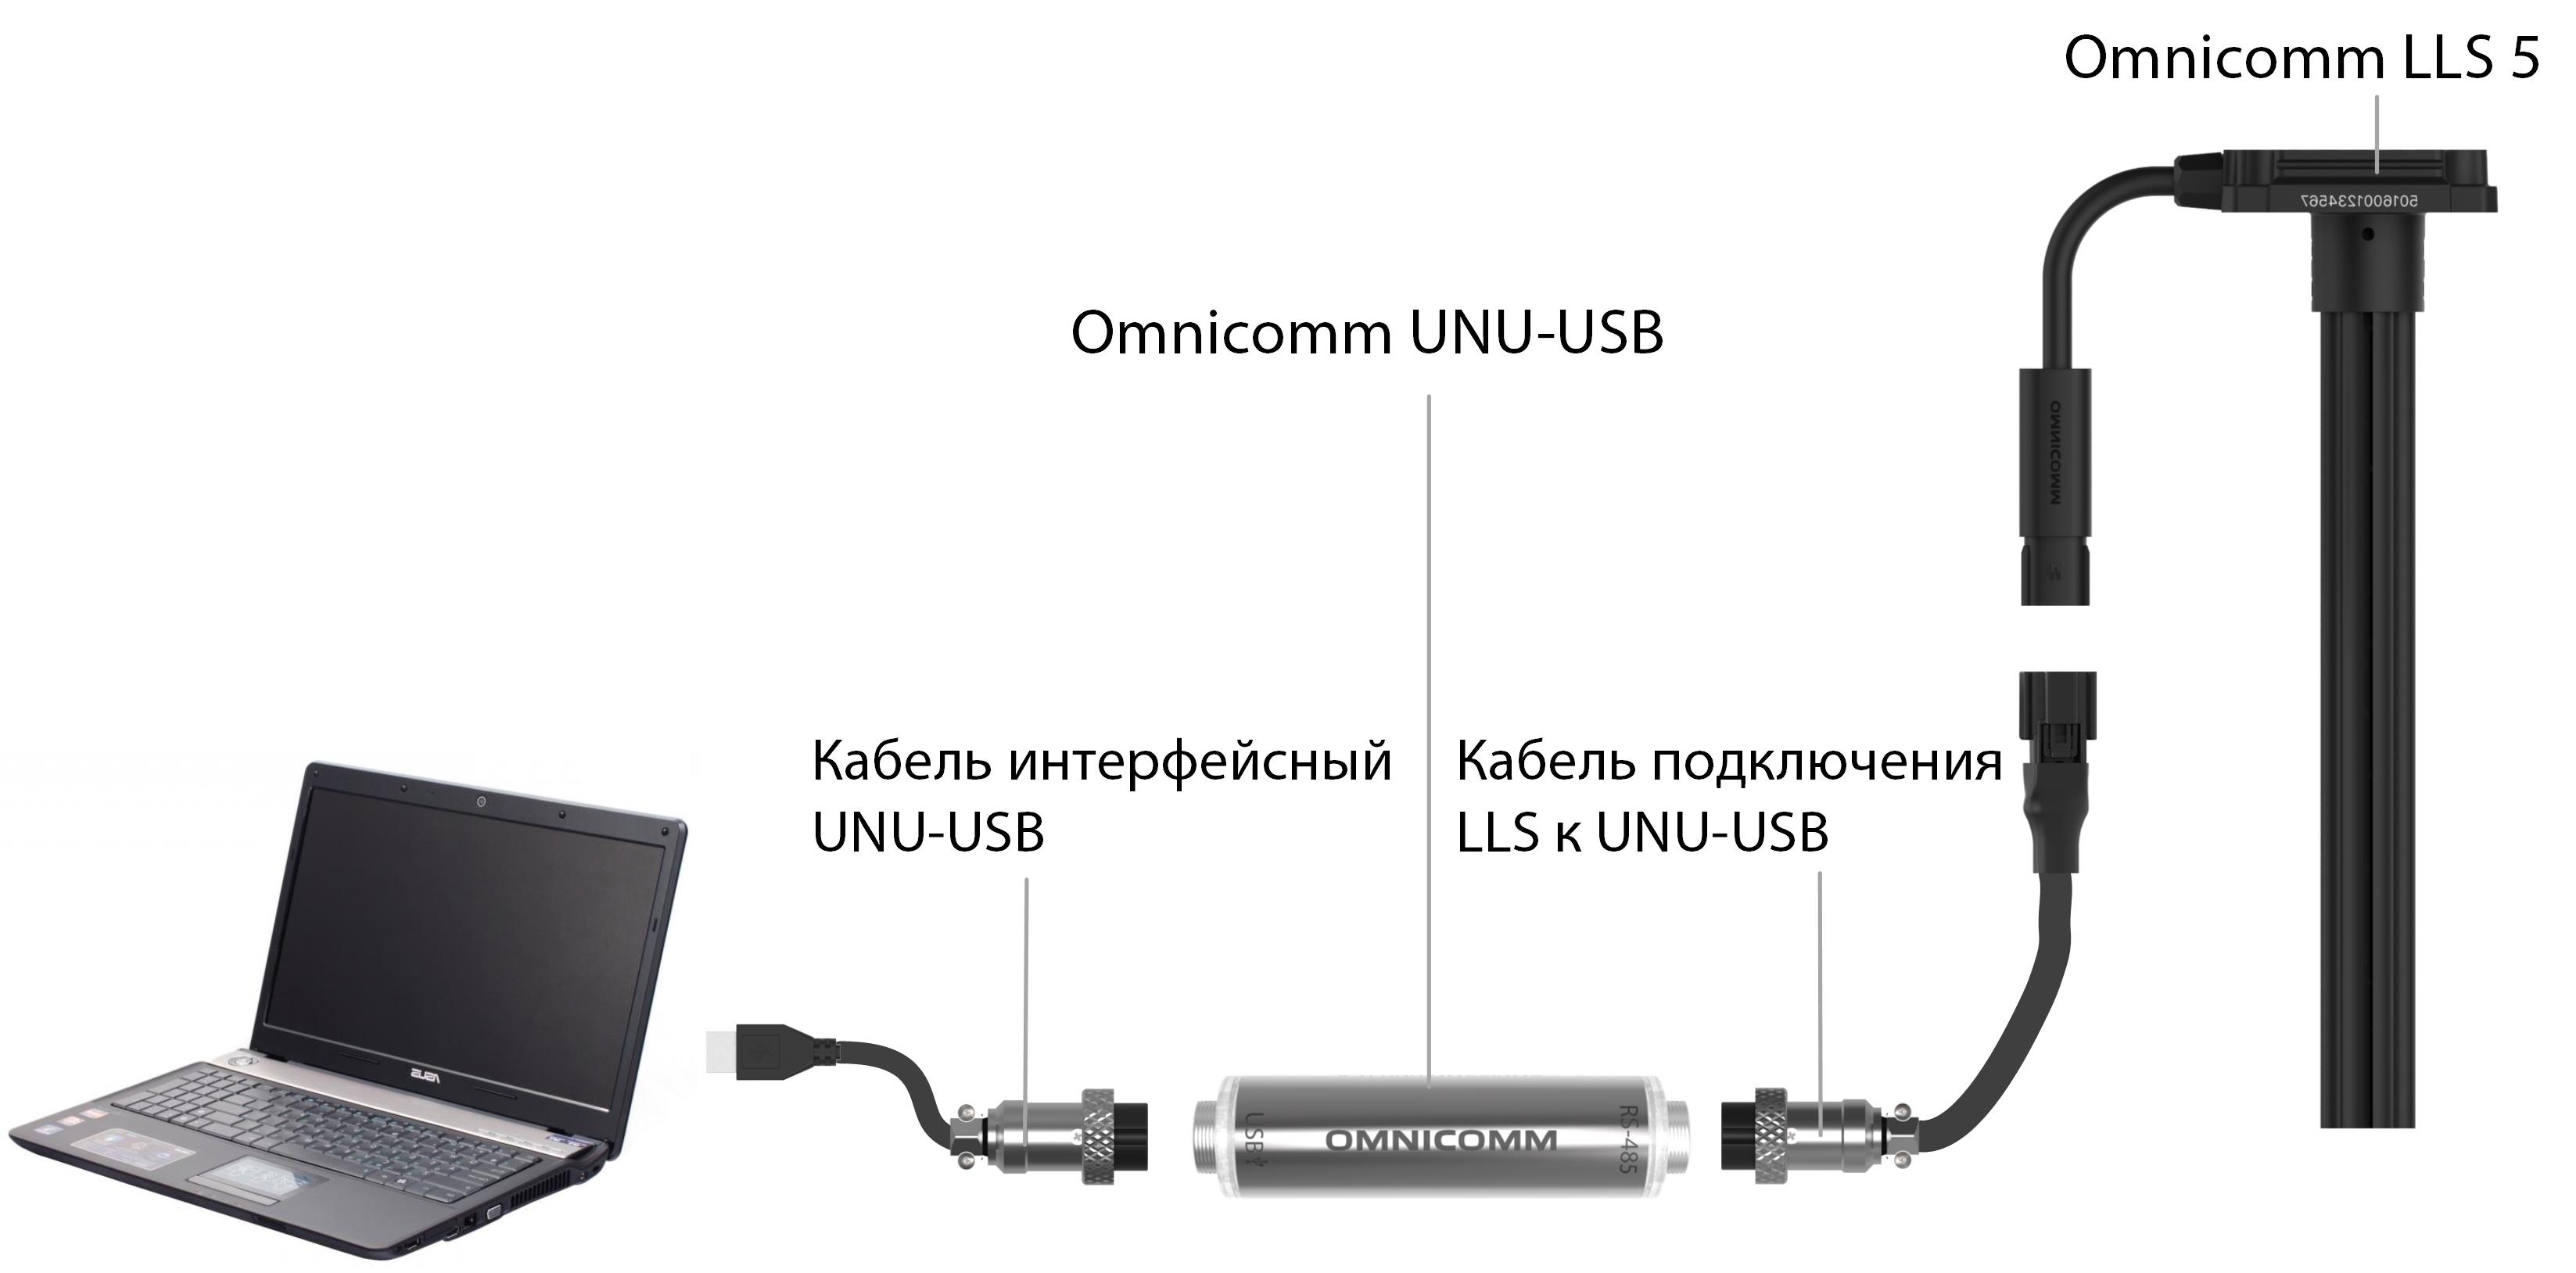 Подключение датчика Omnicomm LLS 5 к ПК 